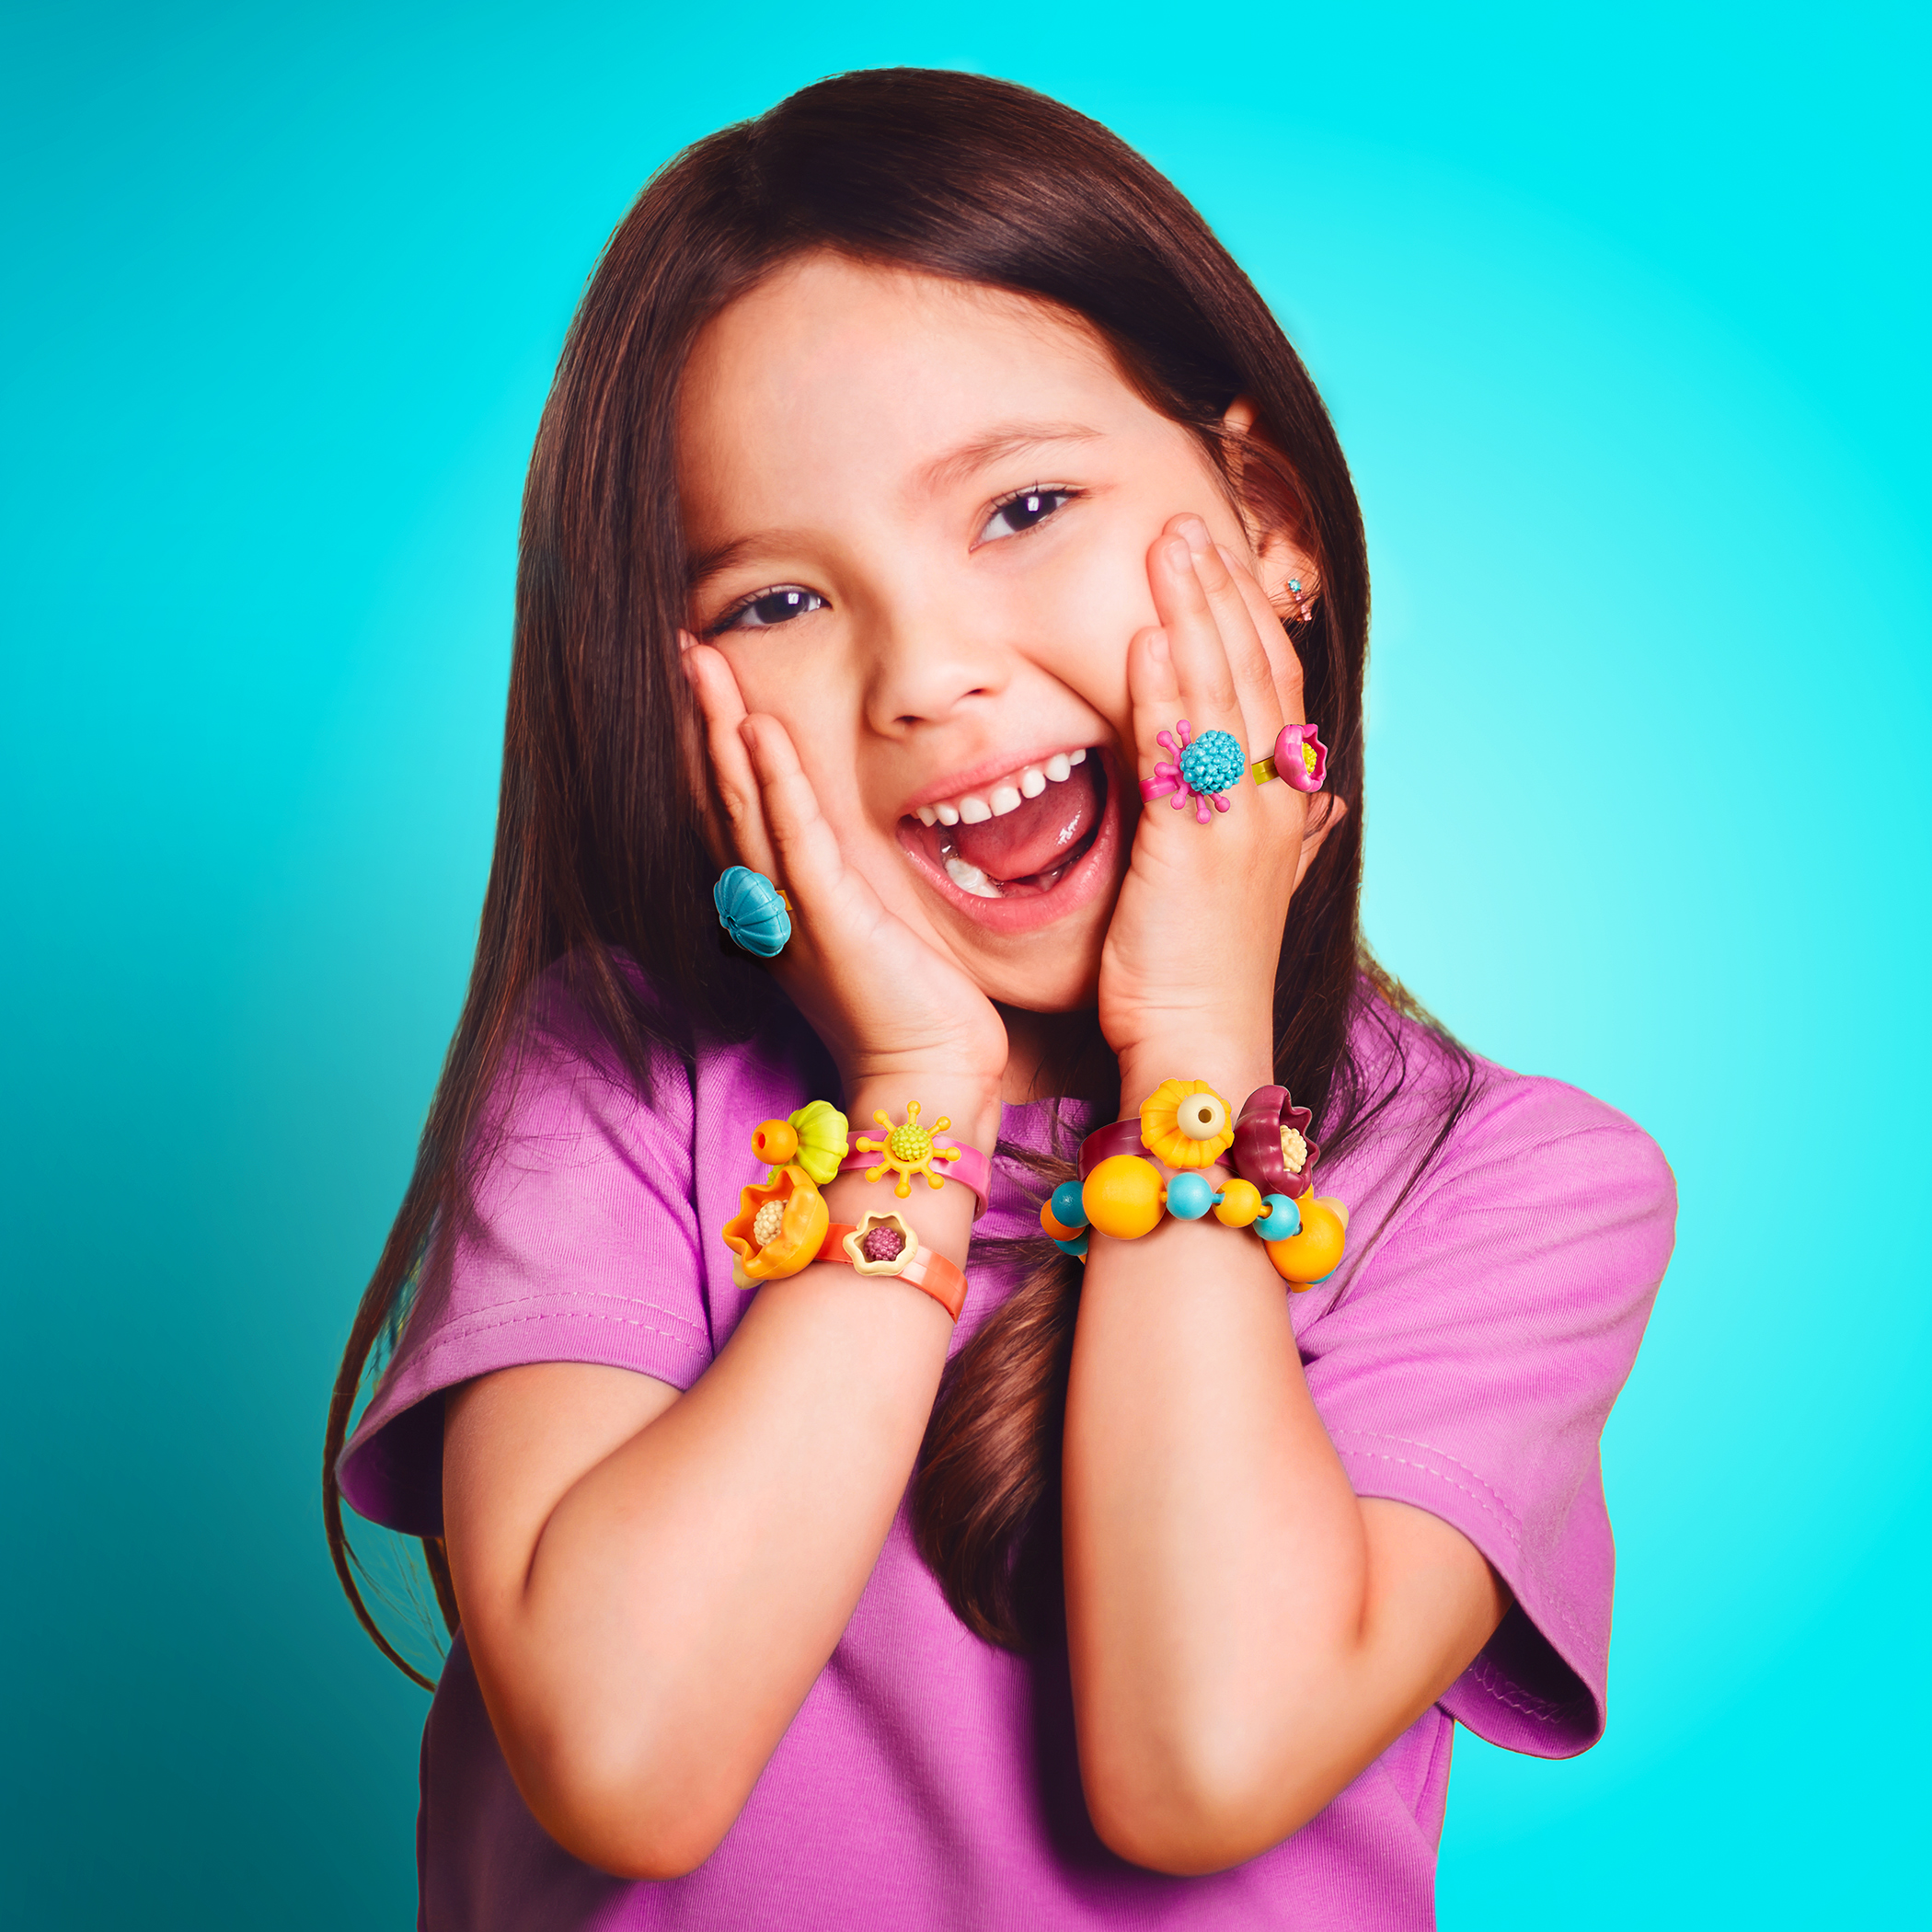 B Toys - DIY Jewelry Kit for Kids 500-Pcs Pop Snap Bead Jewelry 